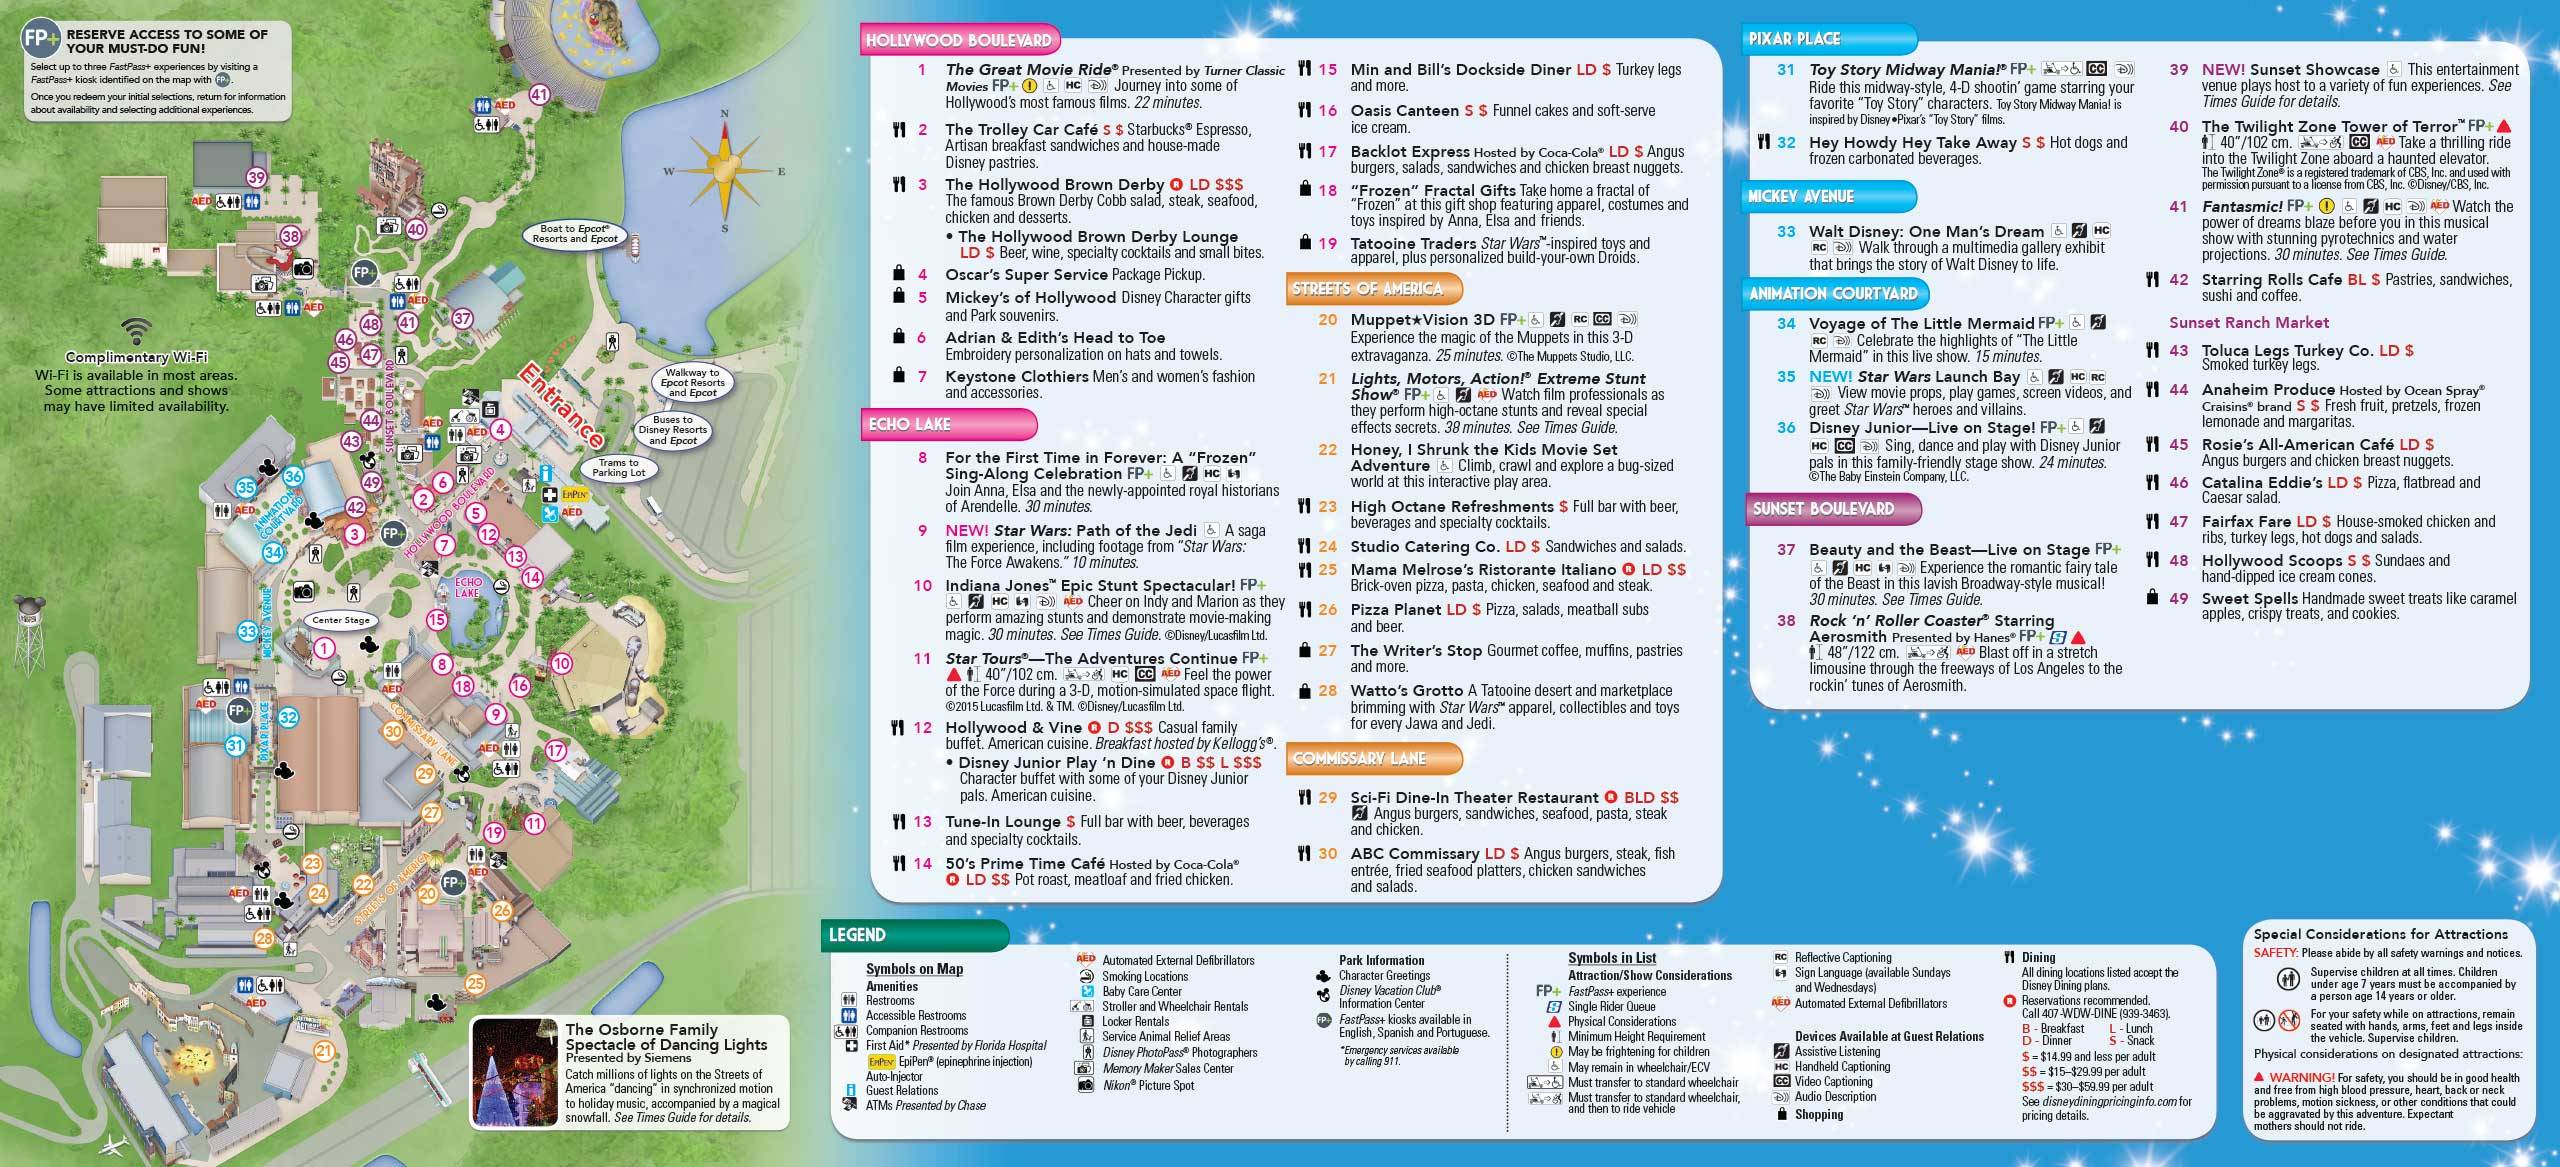 Disney's Hollywood Studios Guide Map December 2015